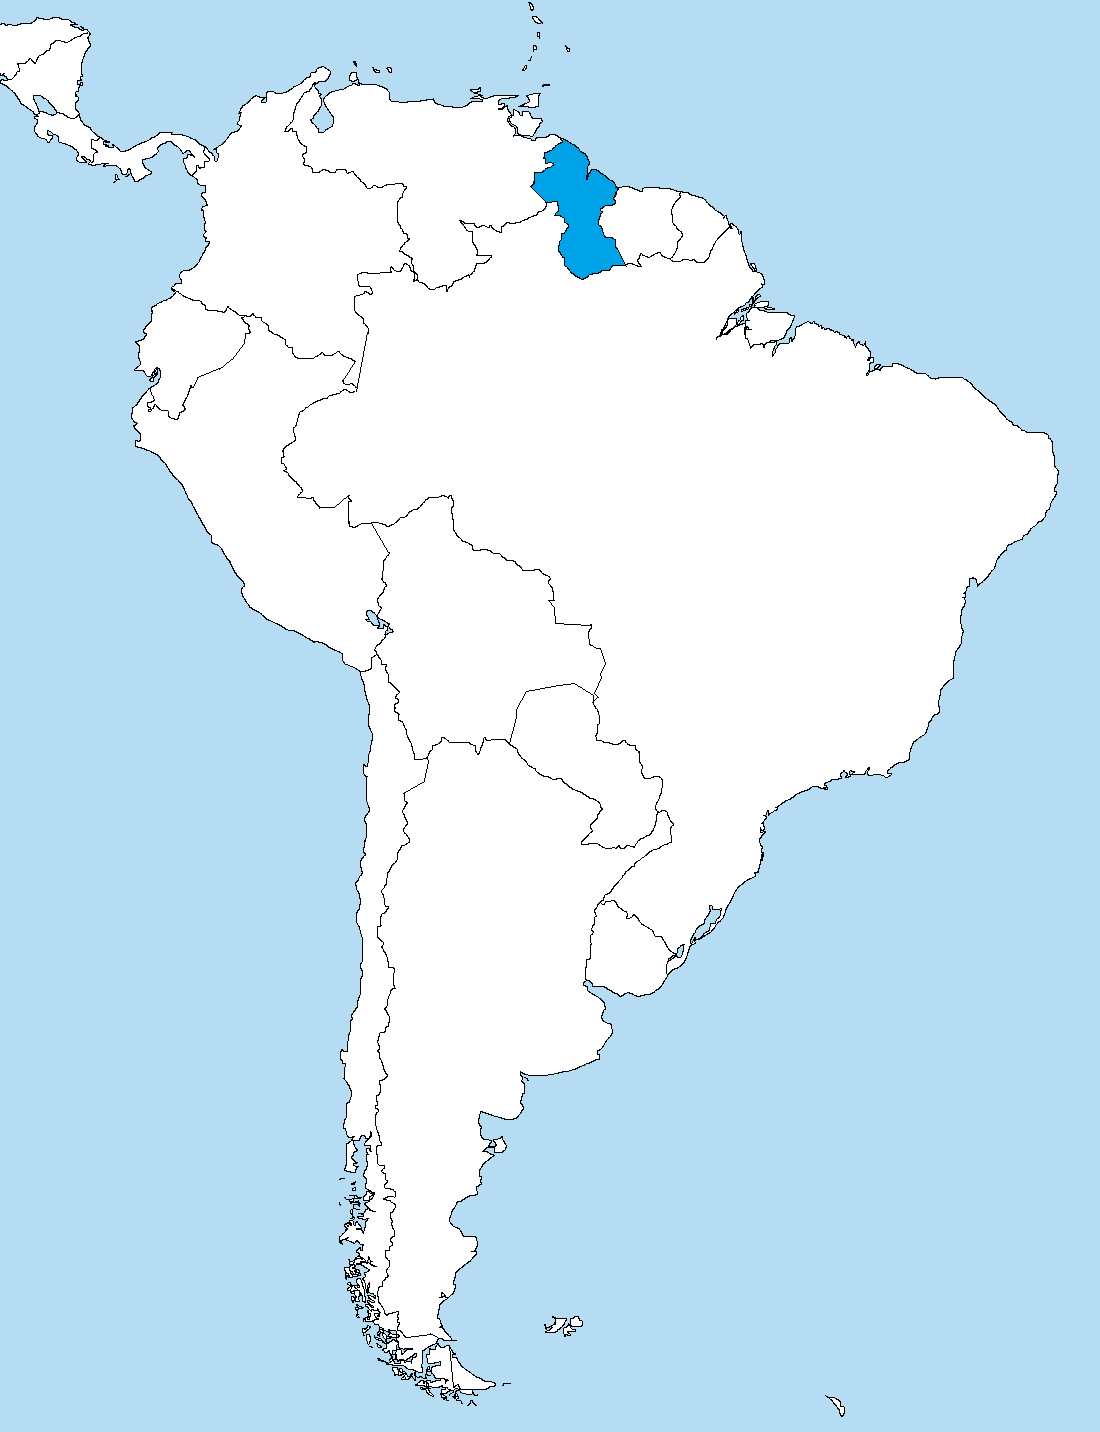 Guyana Map South America File:Guyana in South America.png   Wikipedia